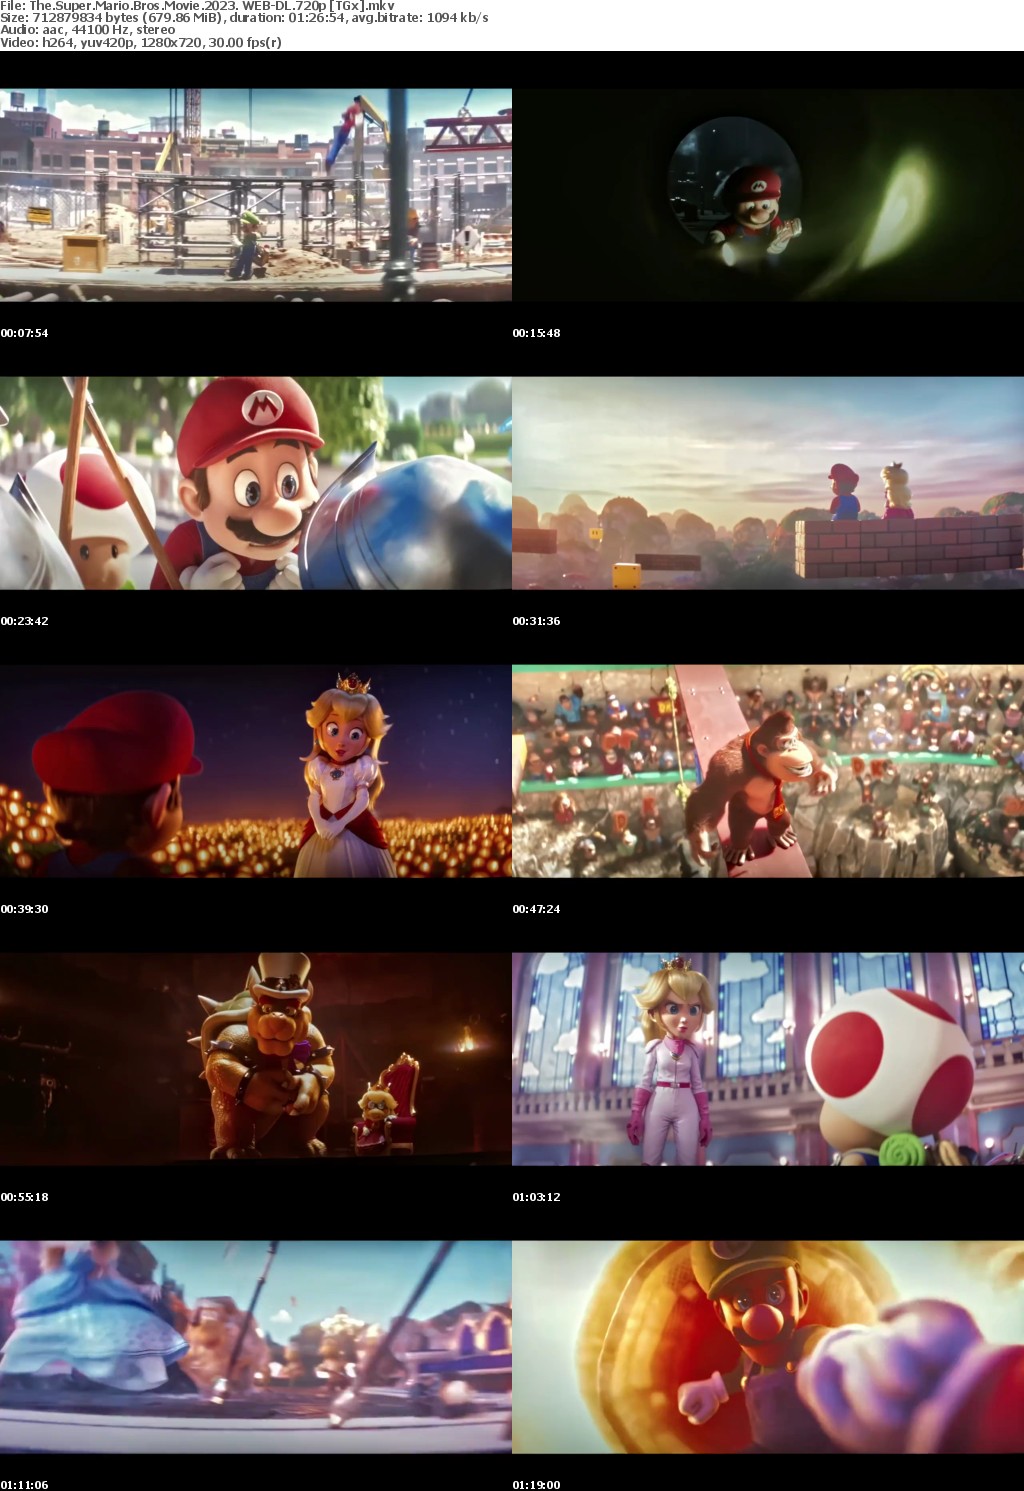 The Super Mario Bros Movie 2023 WEB-DL 720p